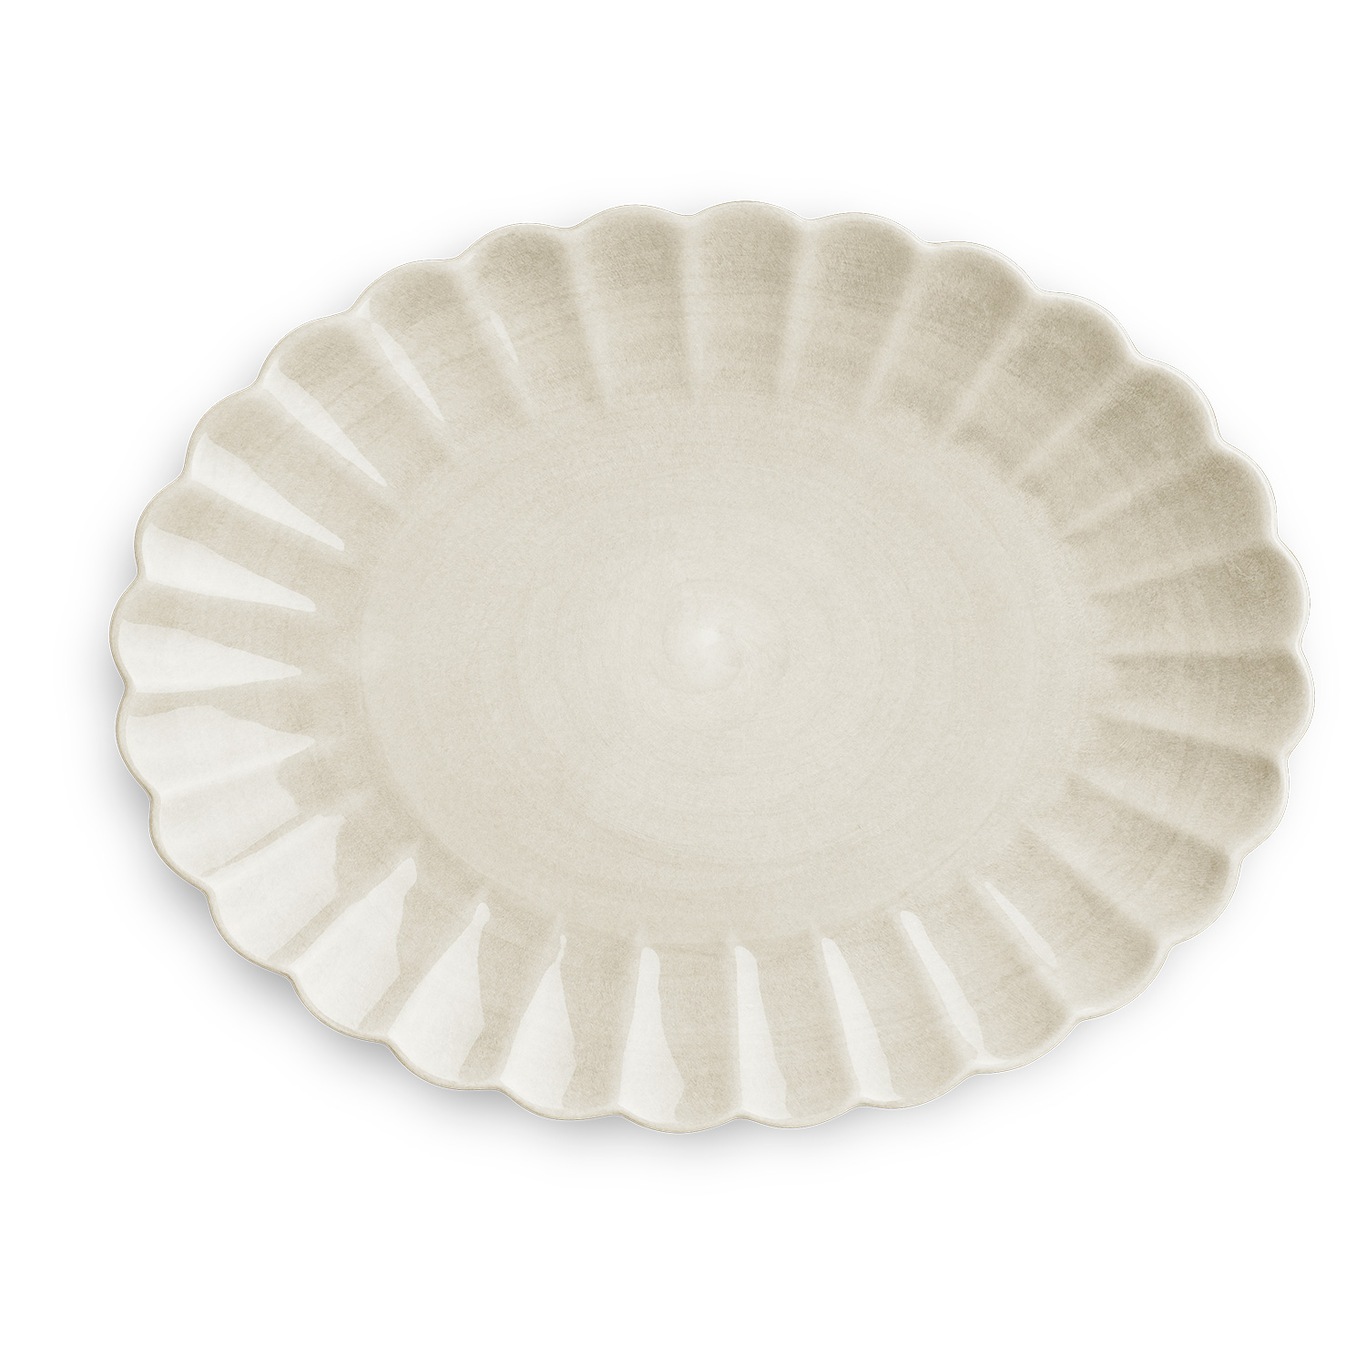 Oyster Dish 35x30 cm, Sand